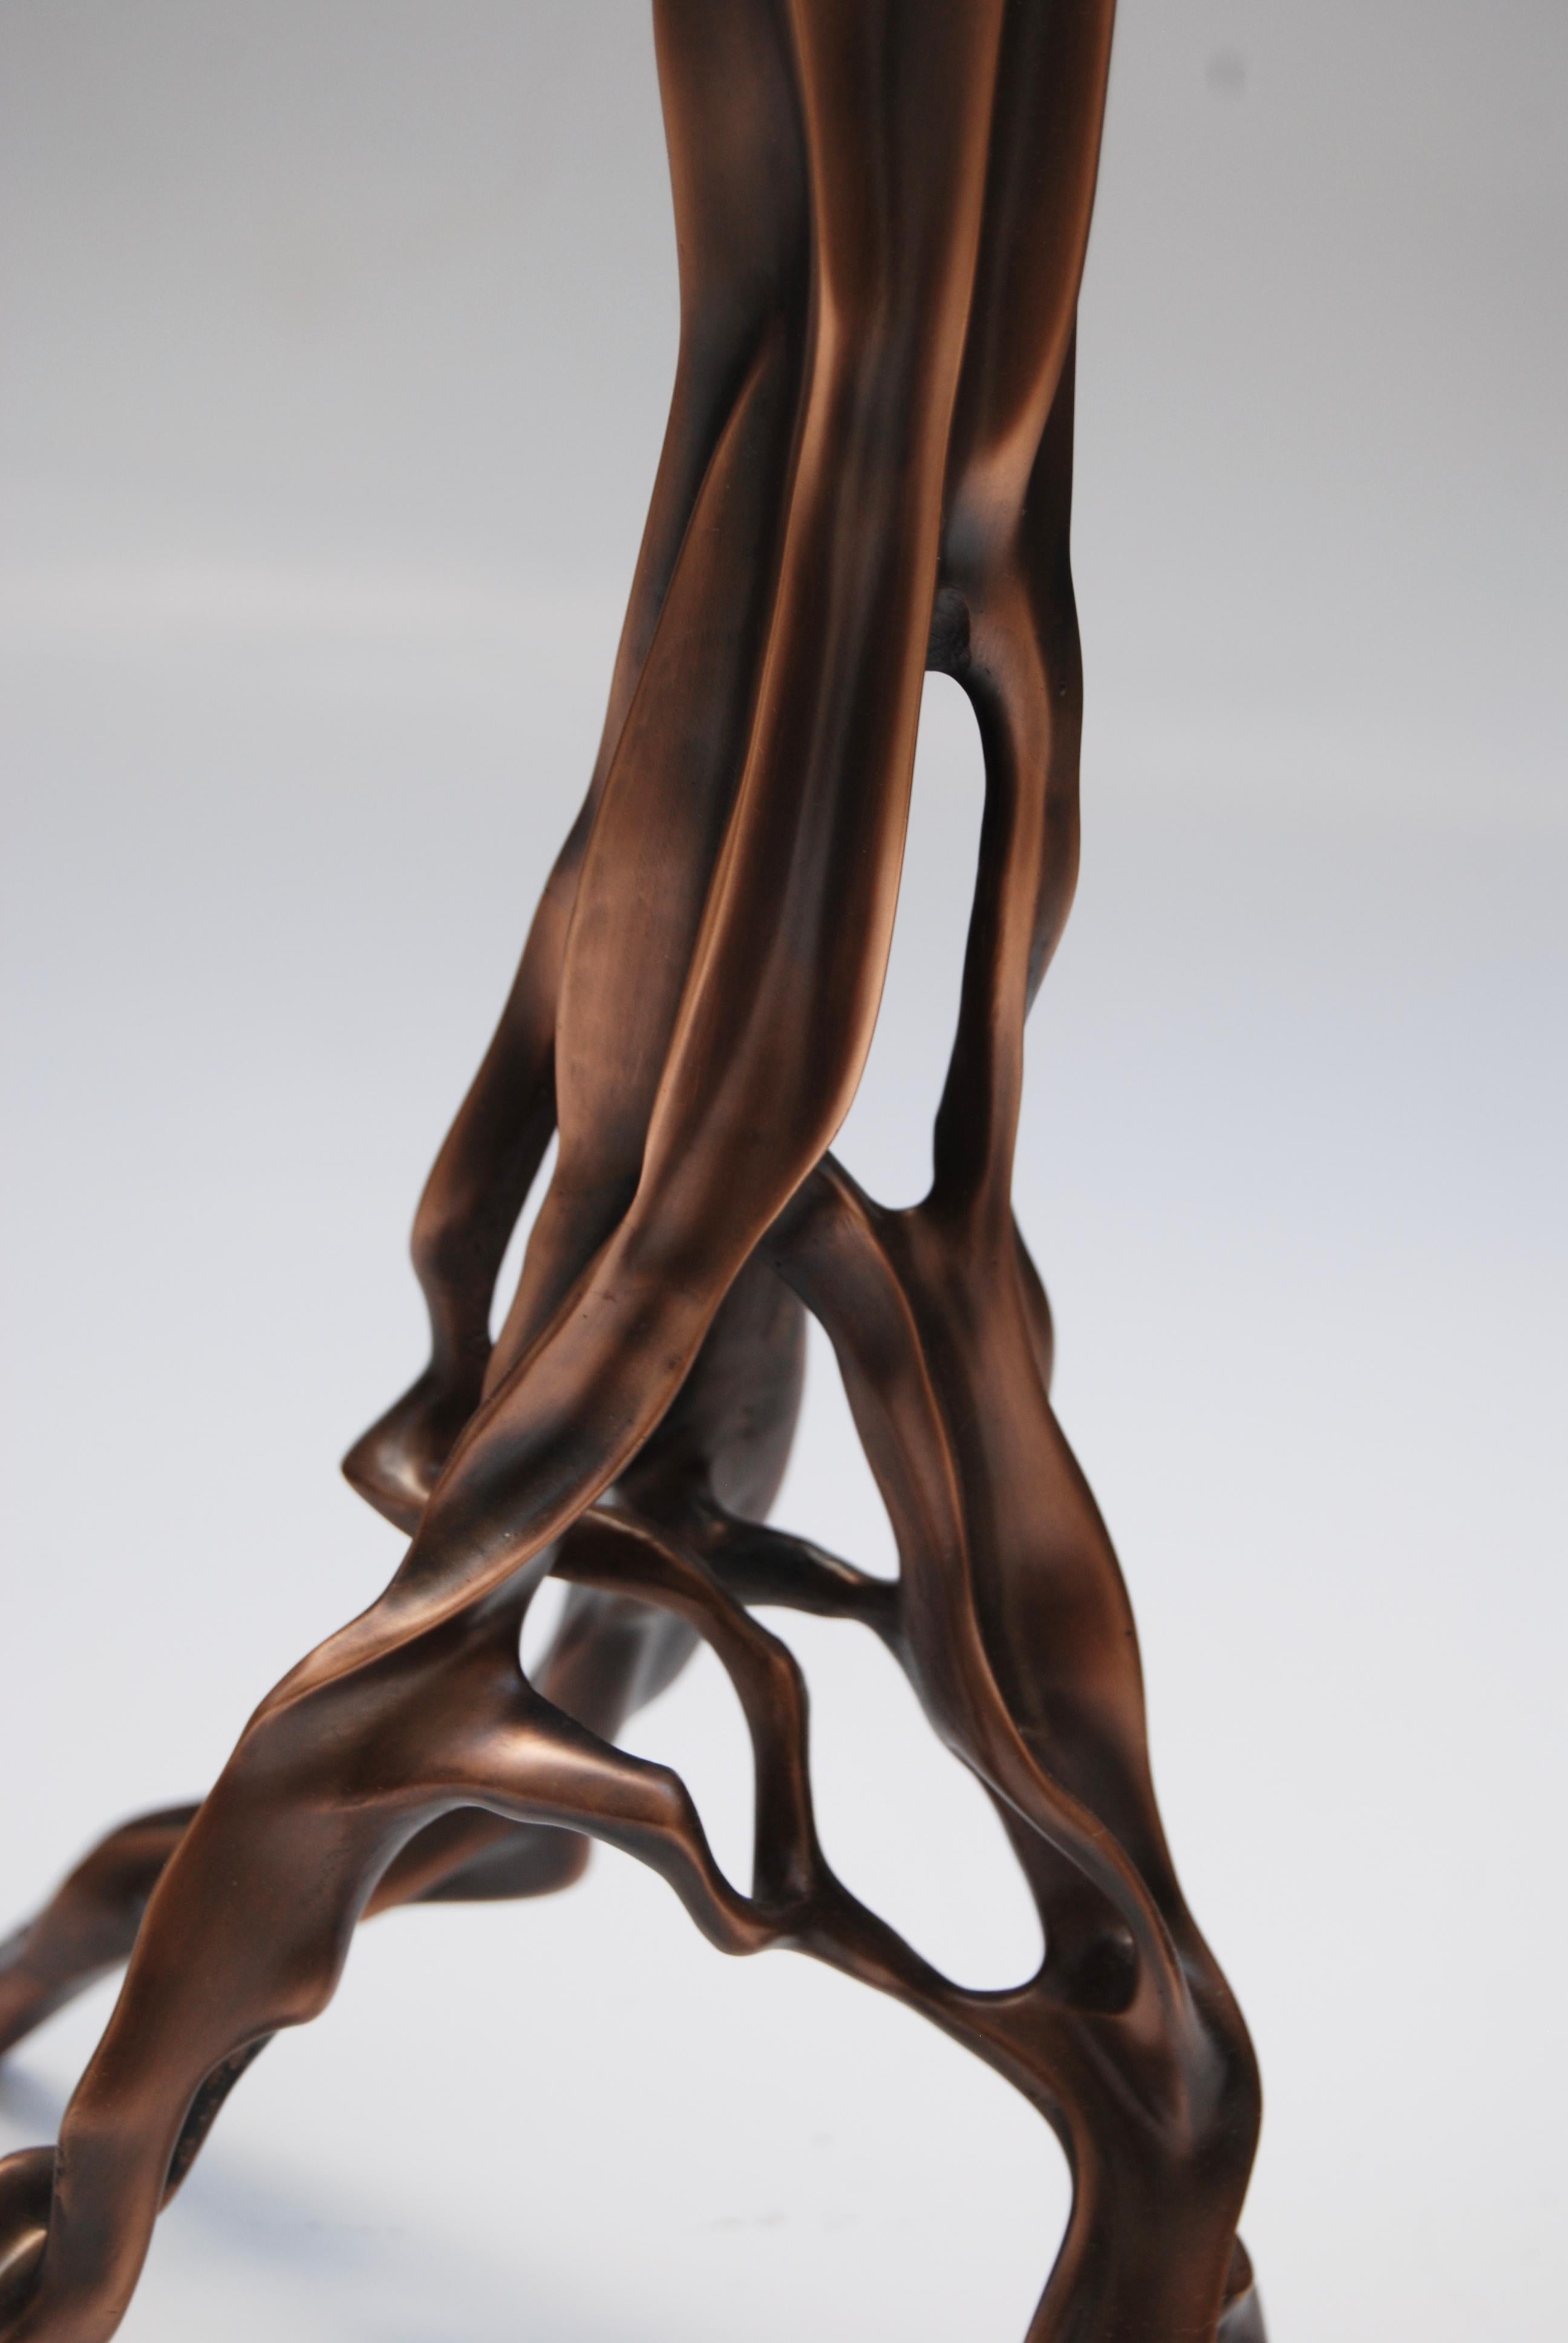 Brazilian Candlestick in Dark Bronze by FAKASAKA Design